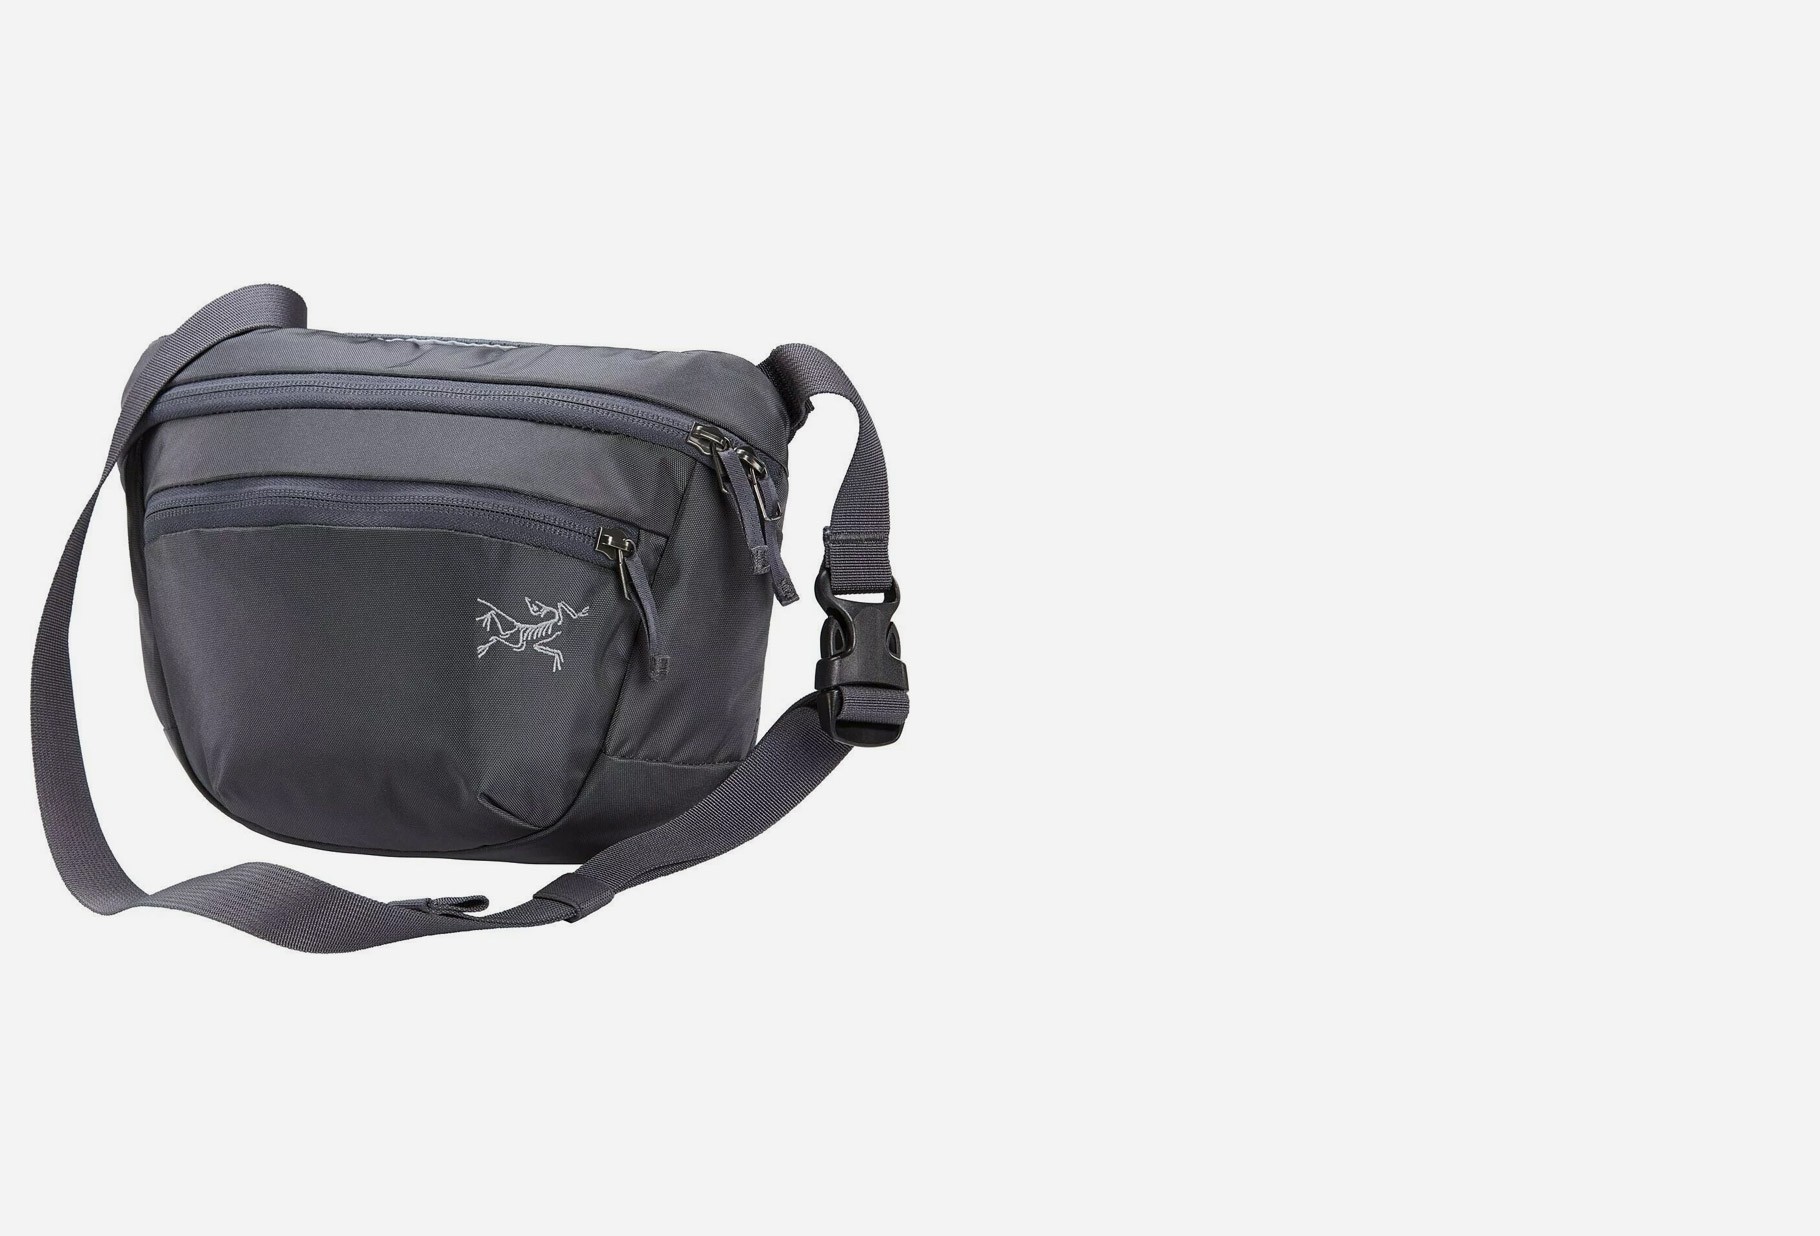 ARC'TERYX / Mantis 2 waistpack Black